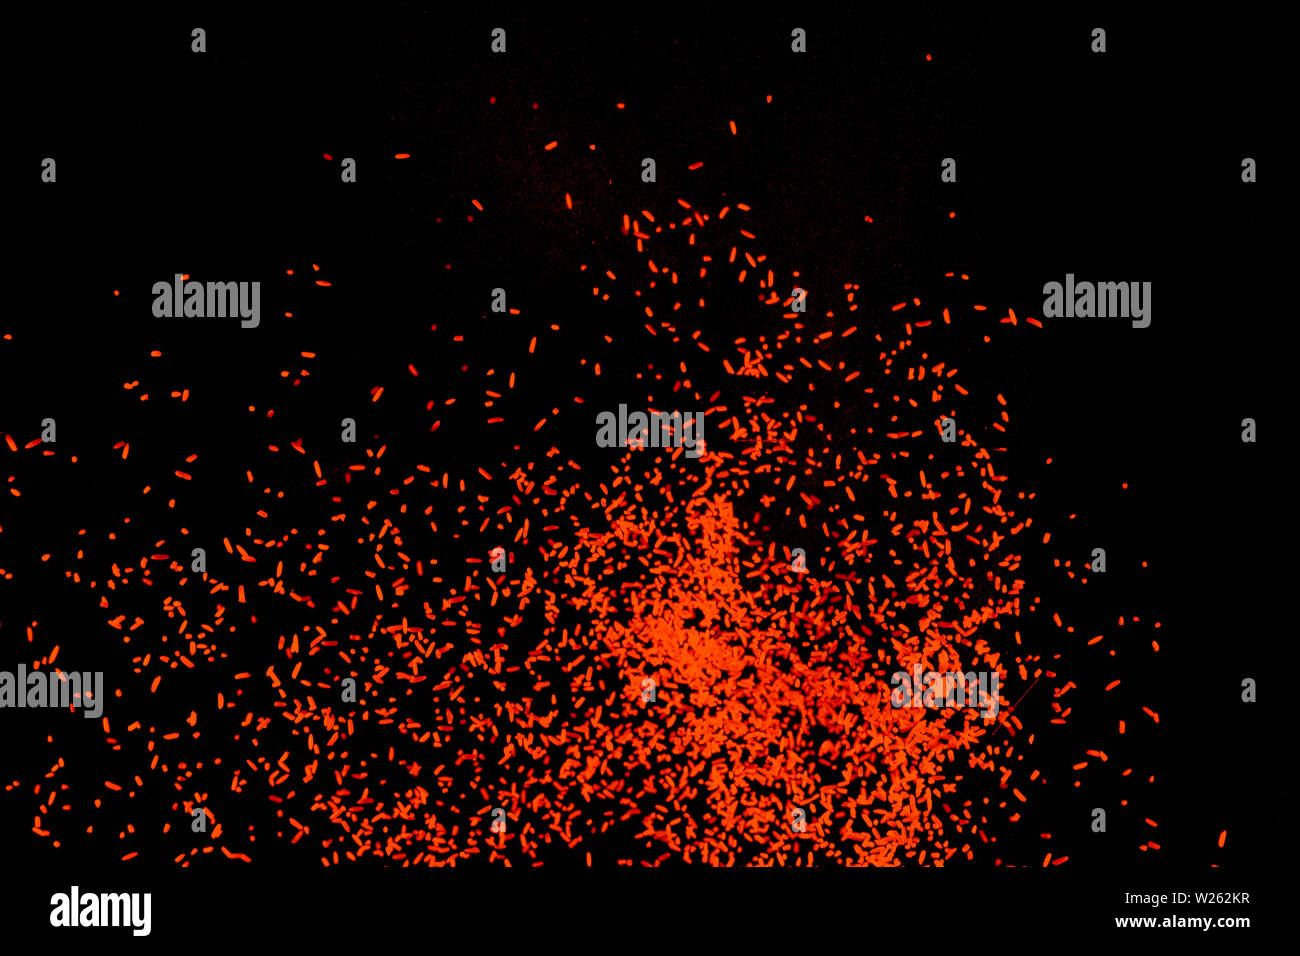 Orange dust particles explosioon on black background. Stock Photo